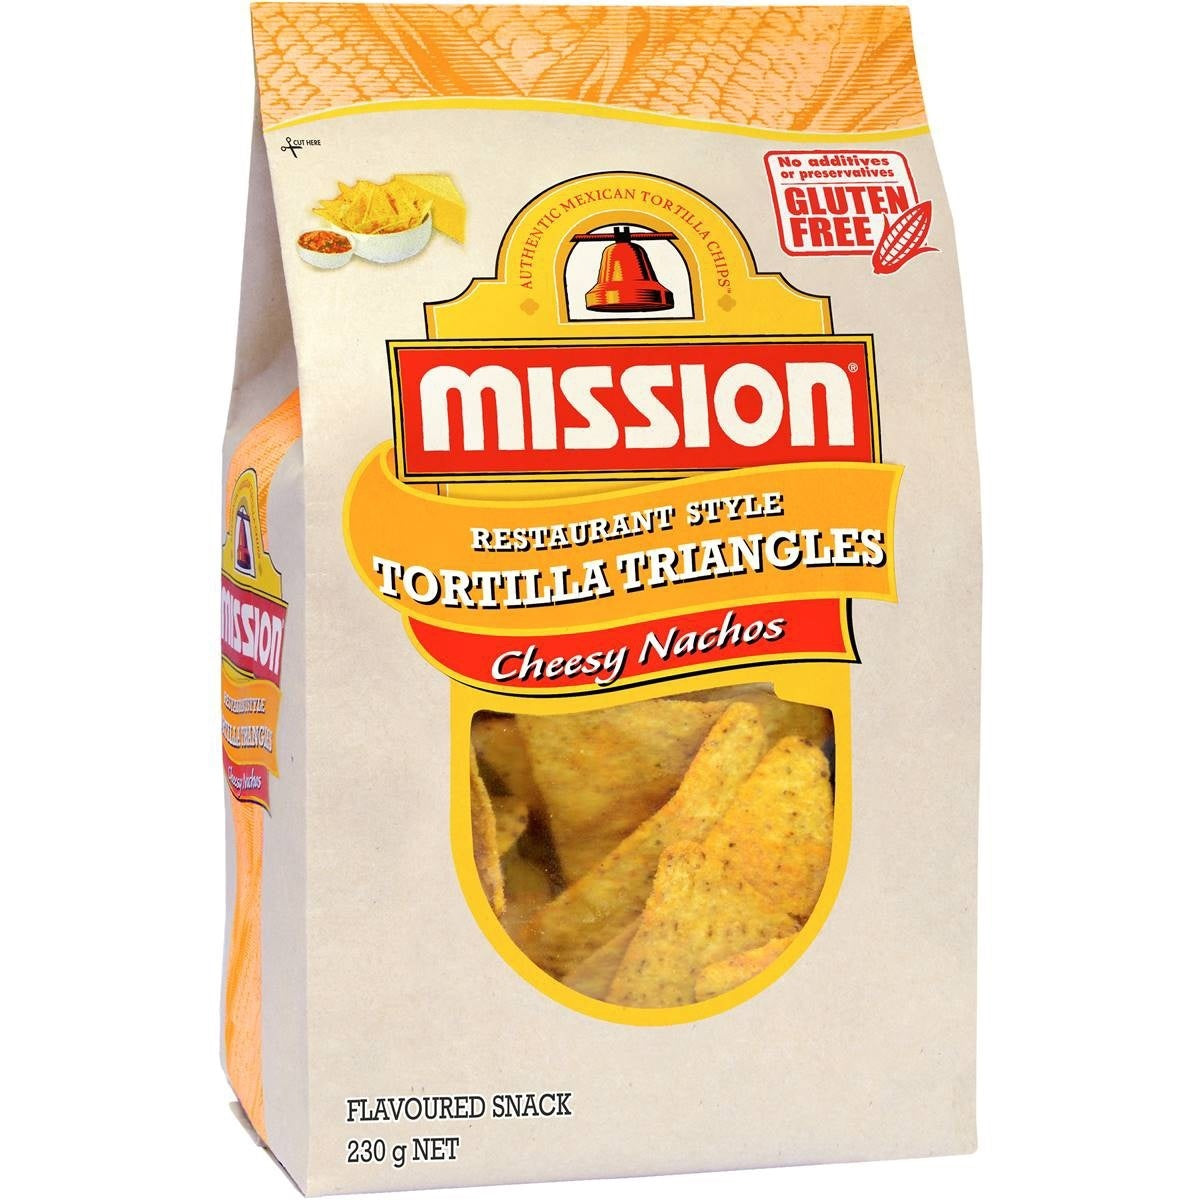 Mission Tortilla Triangles Cheesy Nachos 230g